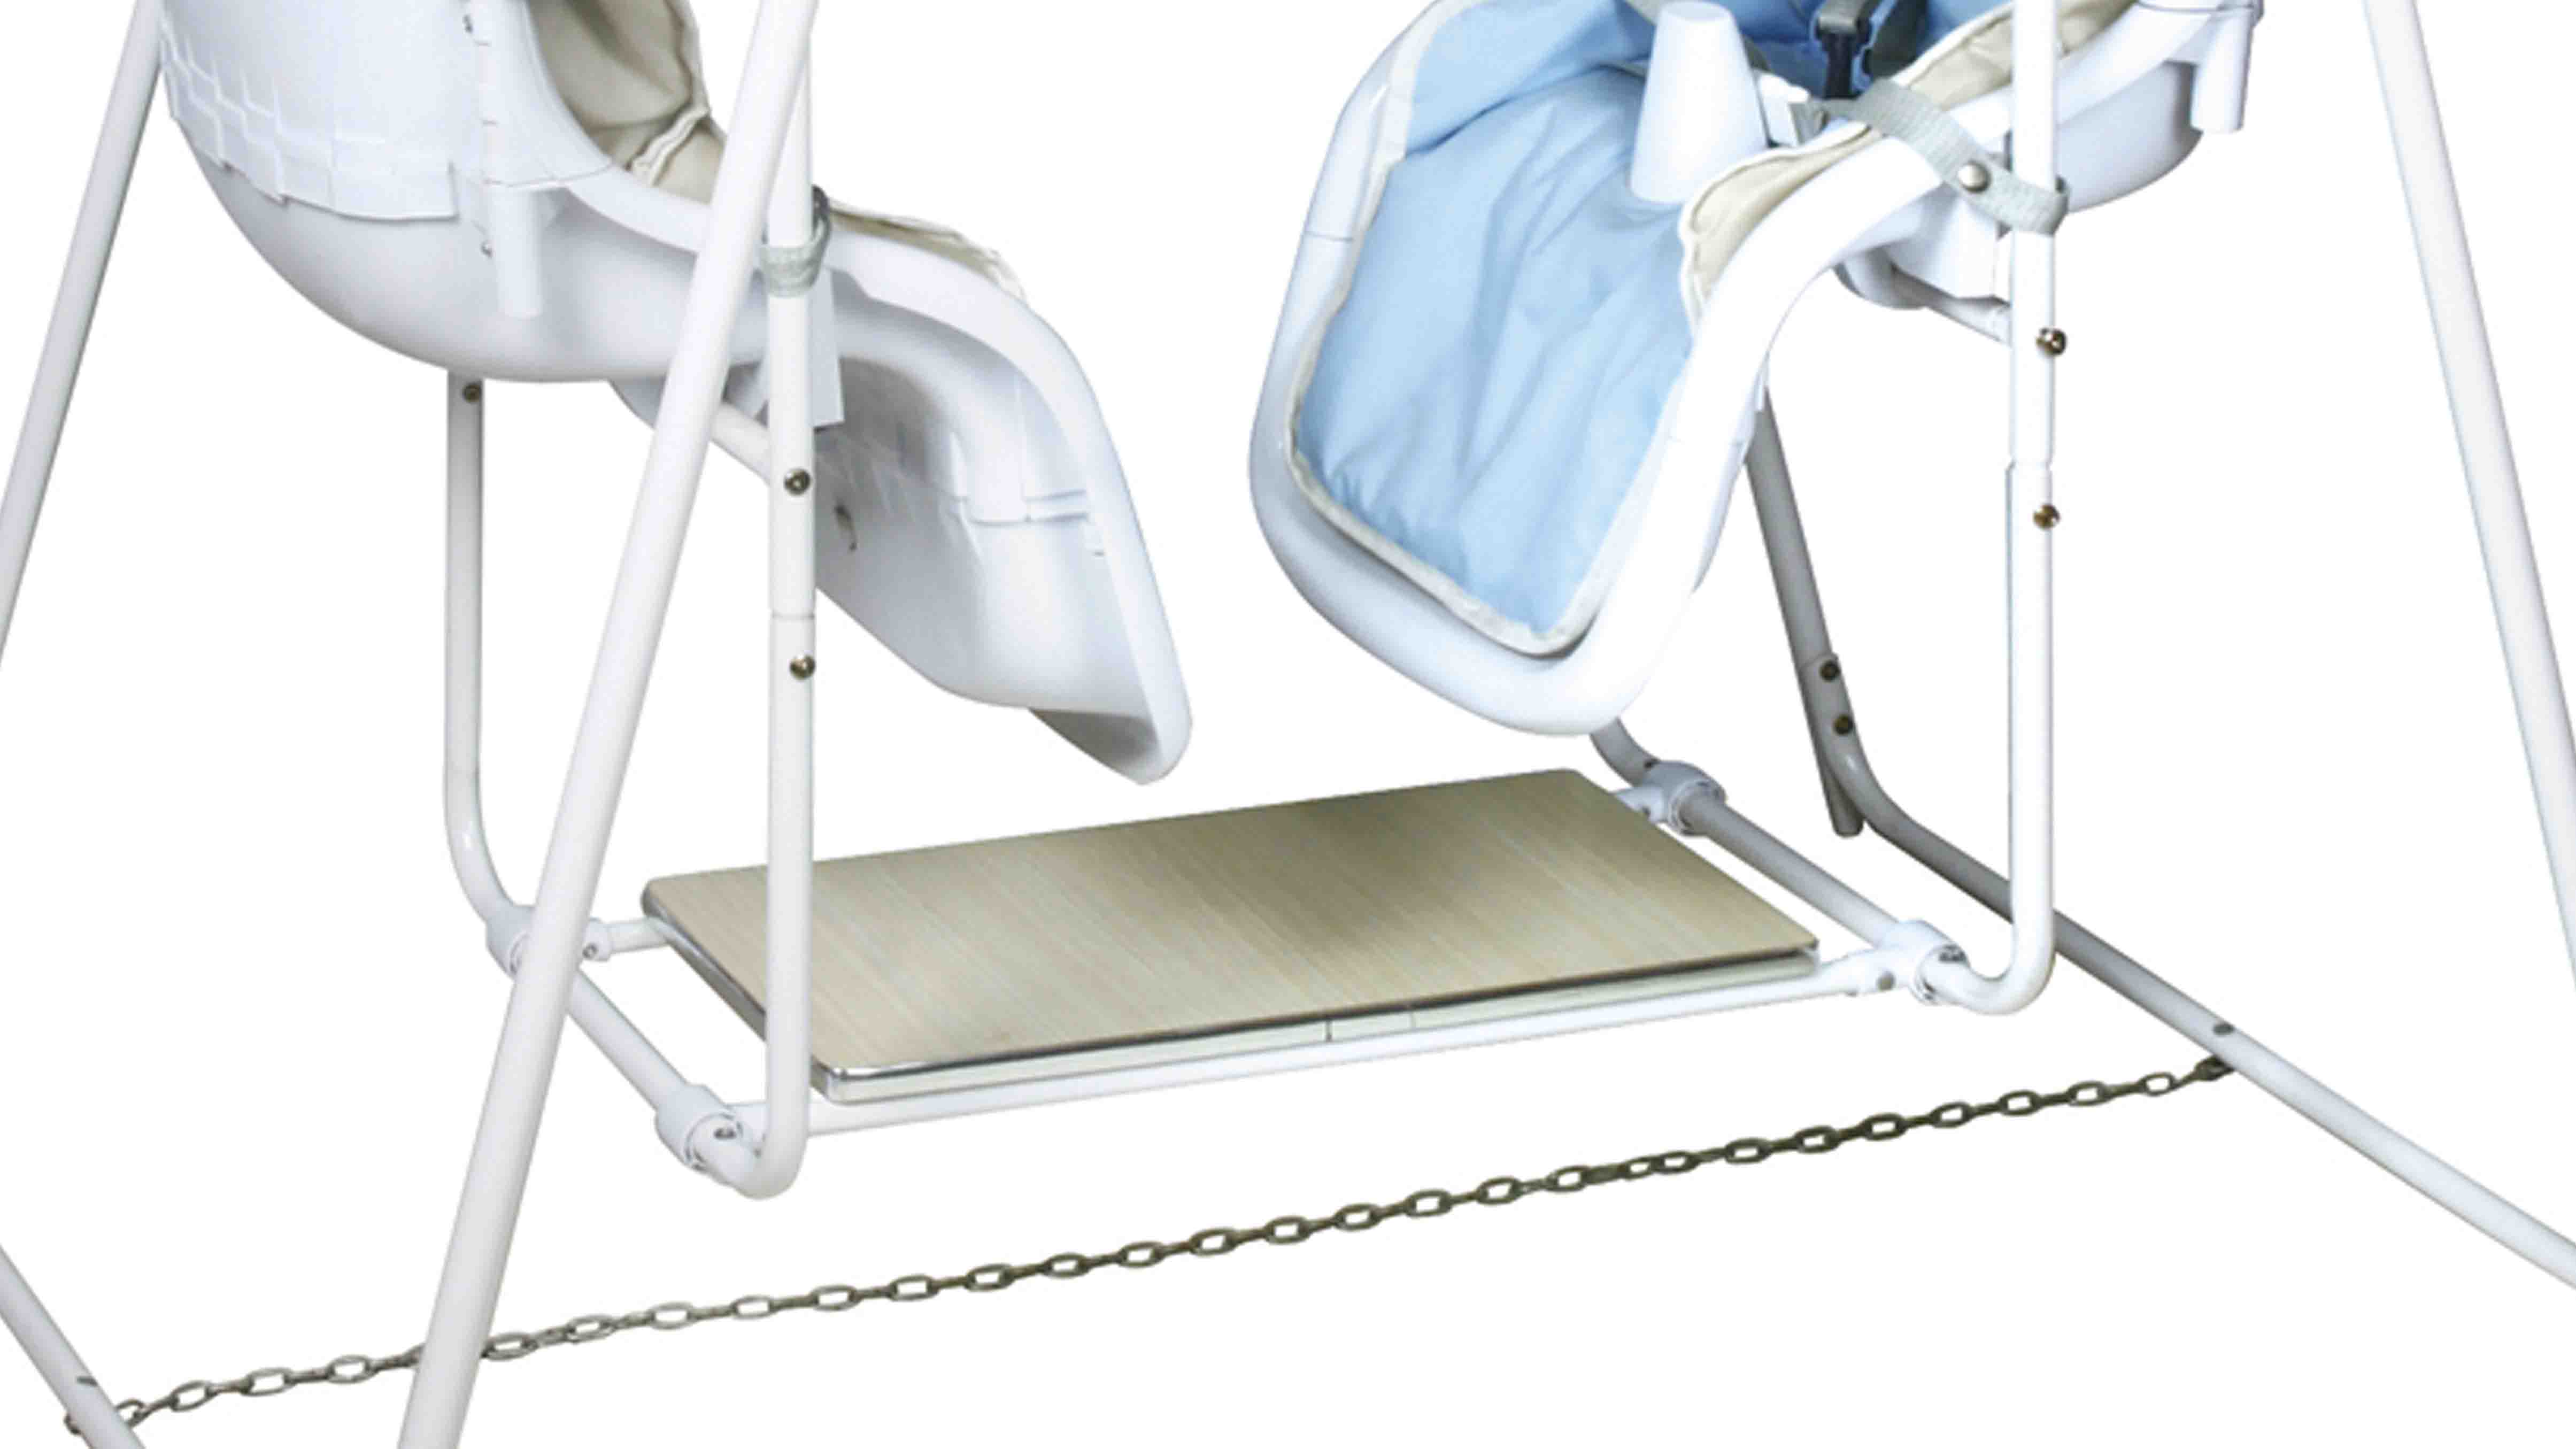 durable buy baby swing design for household